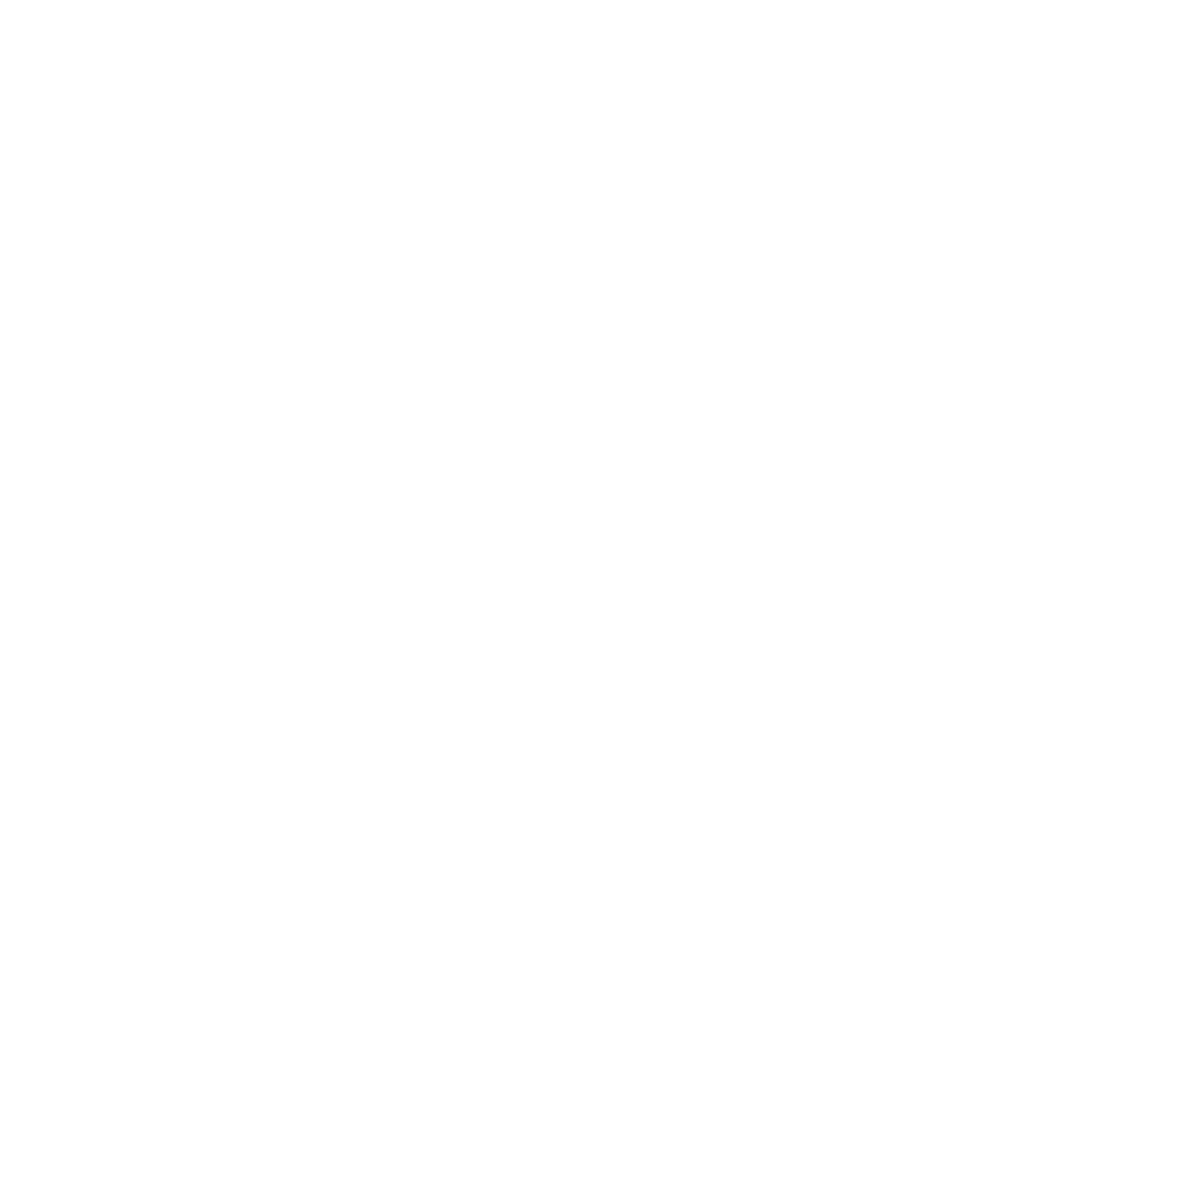 Async asynchronous